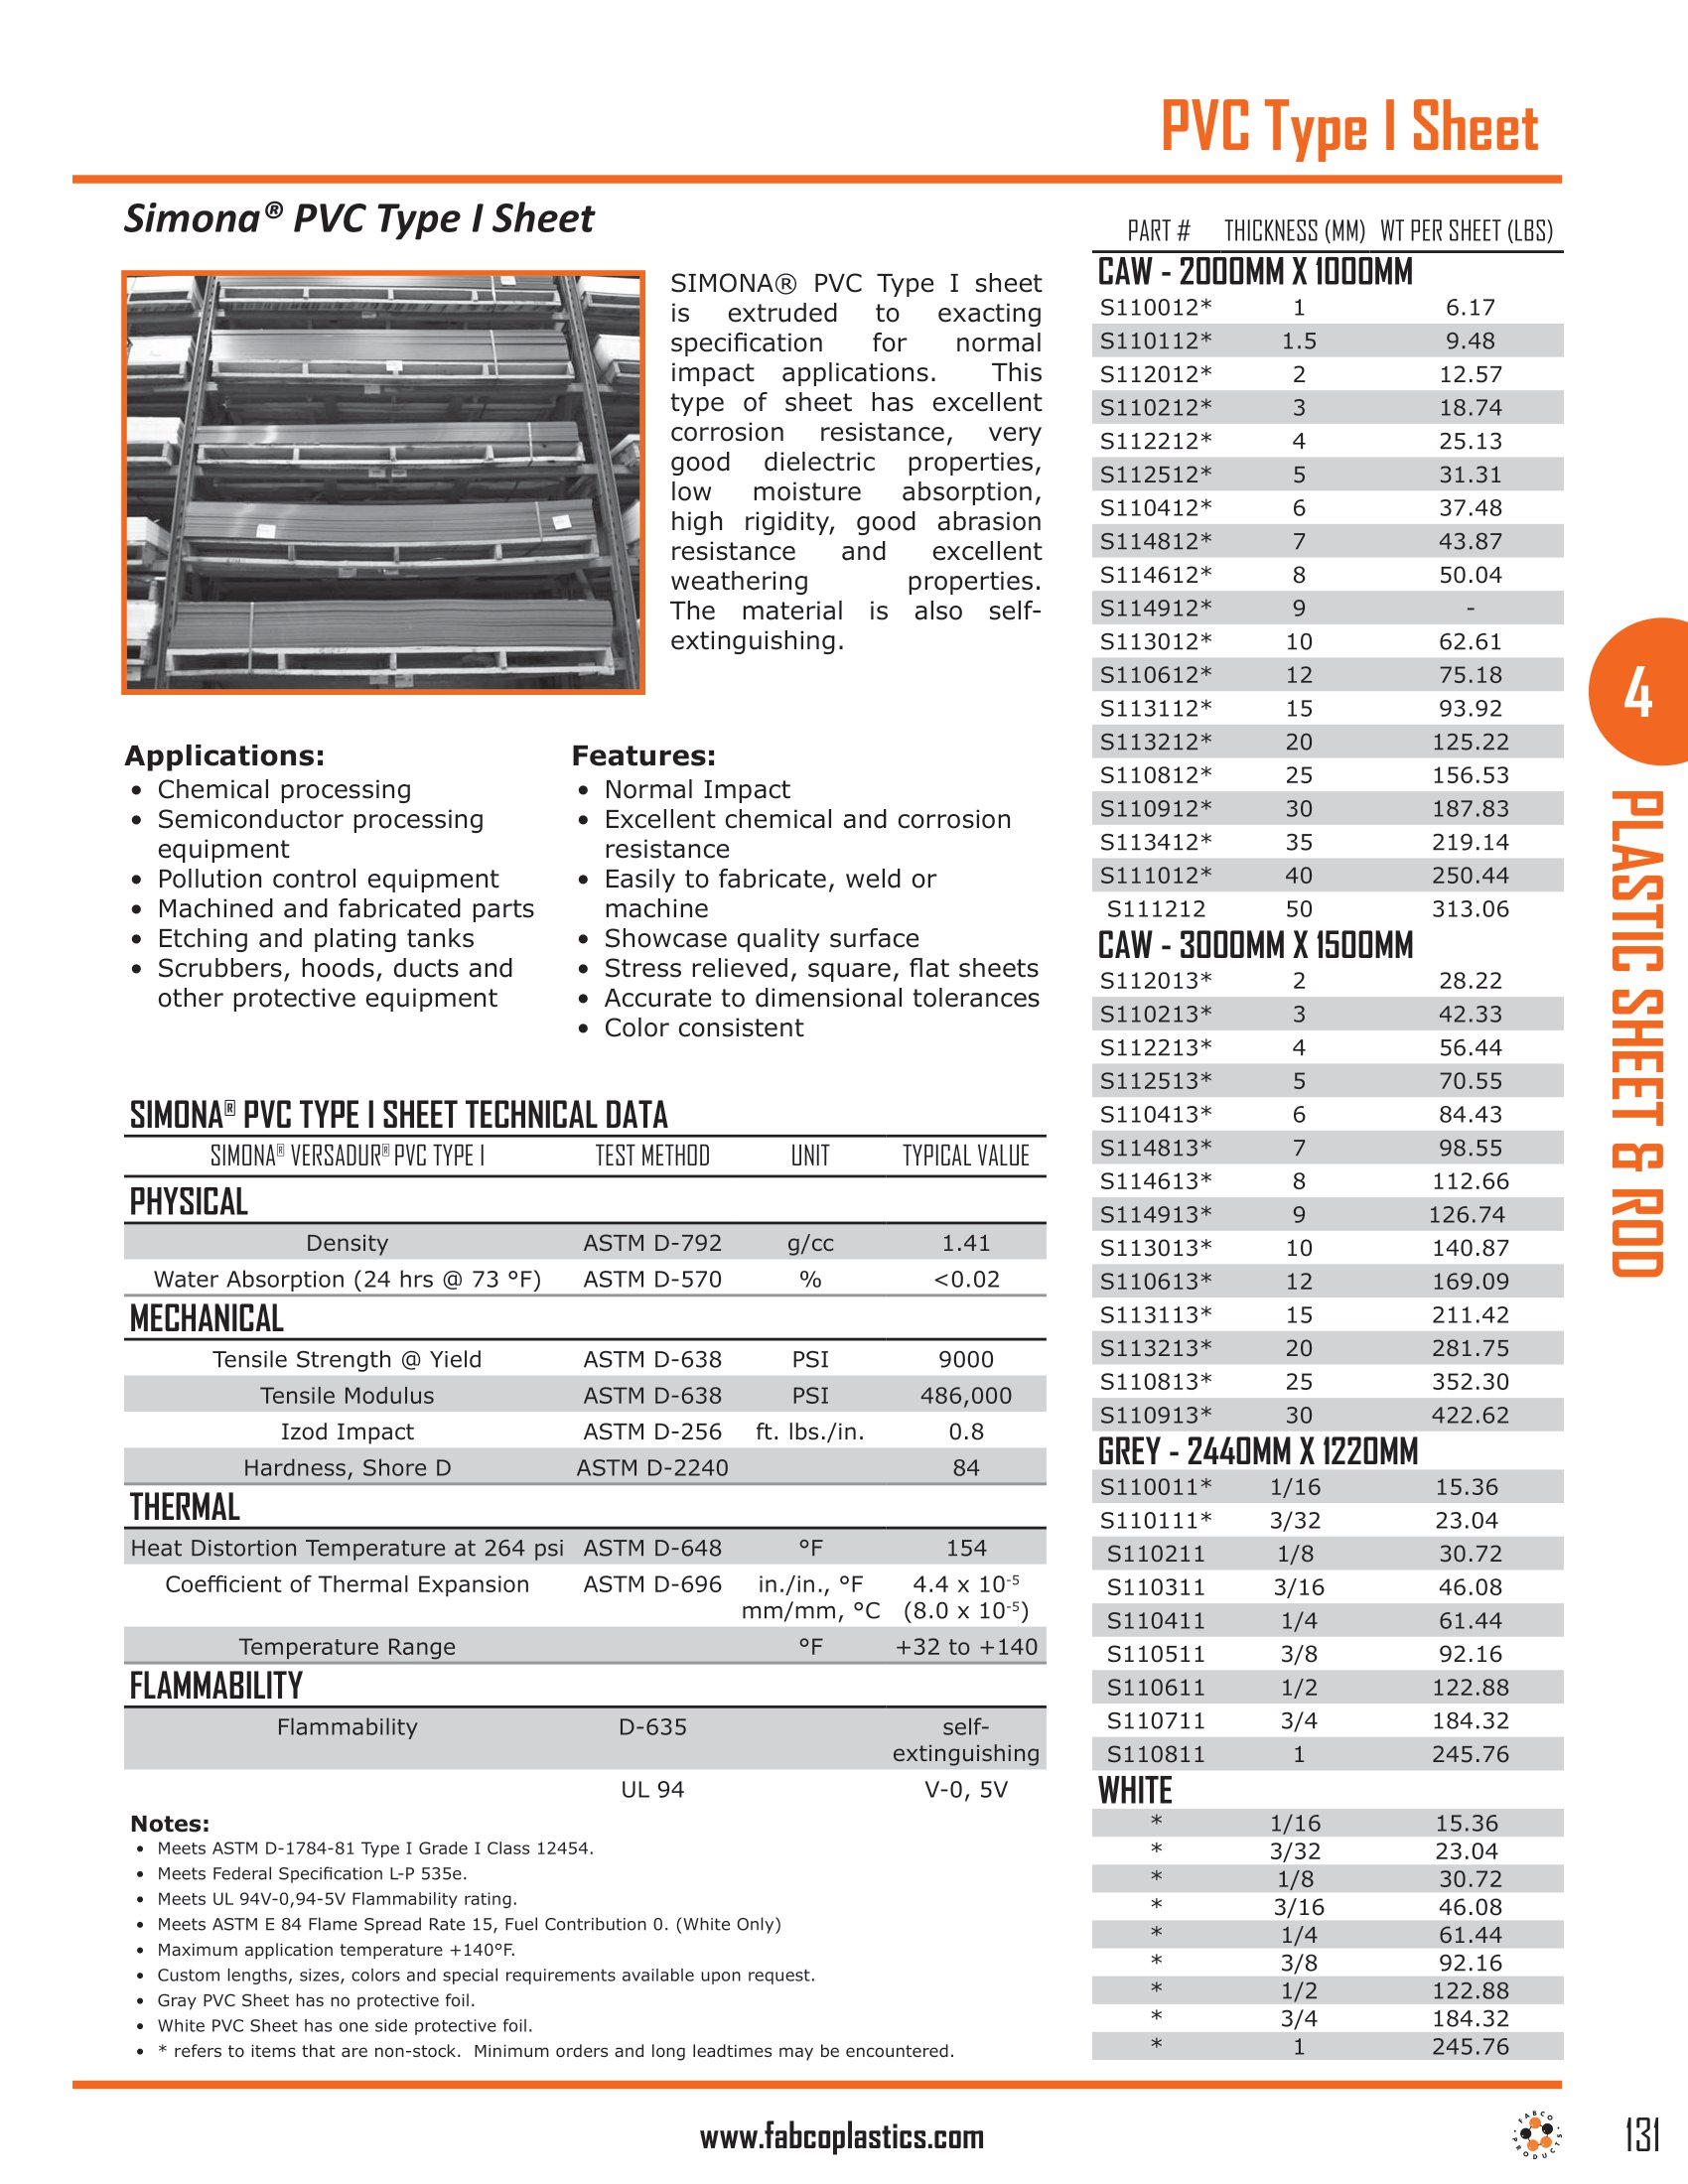 PVC Sheet Type 1